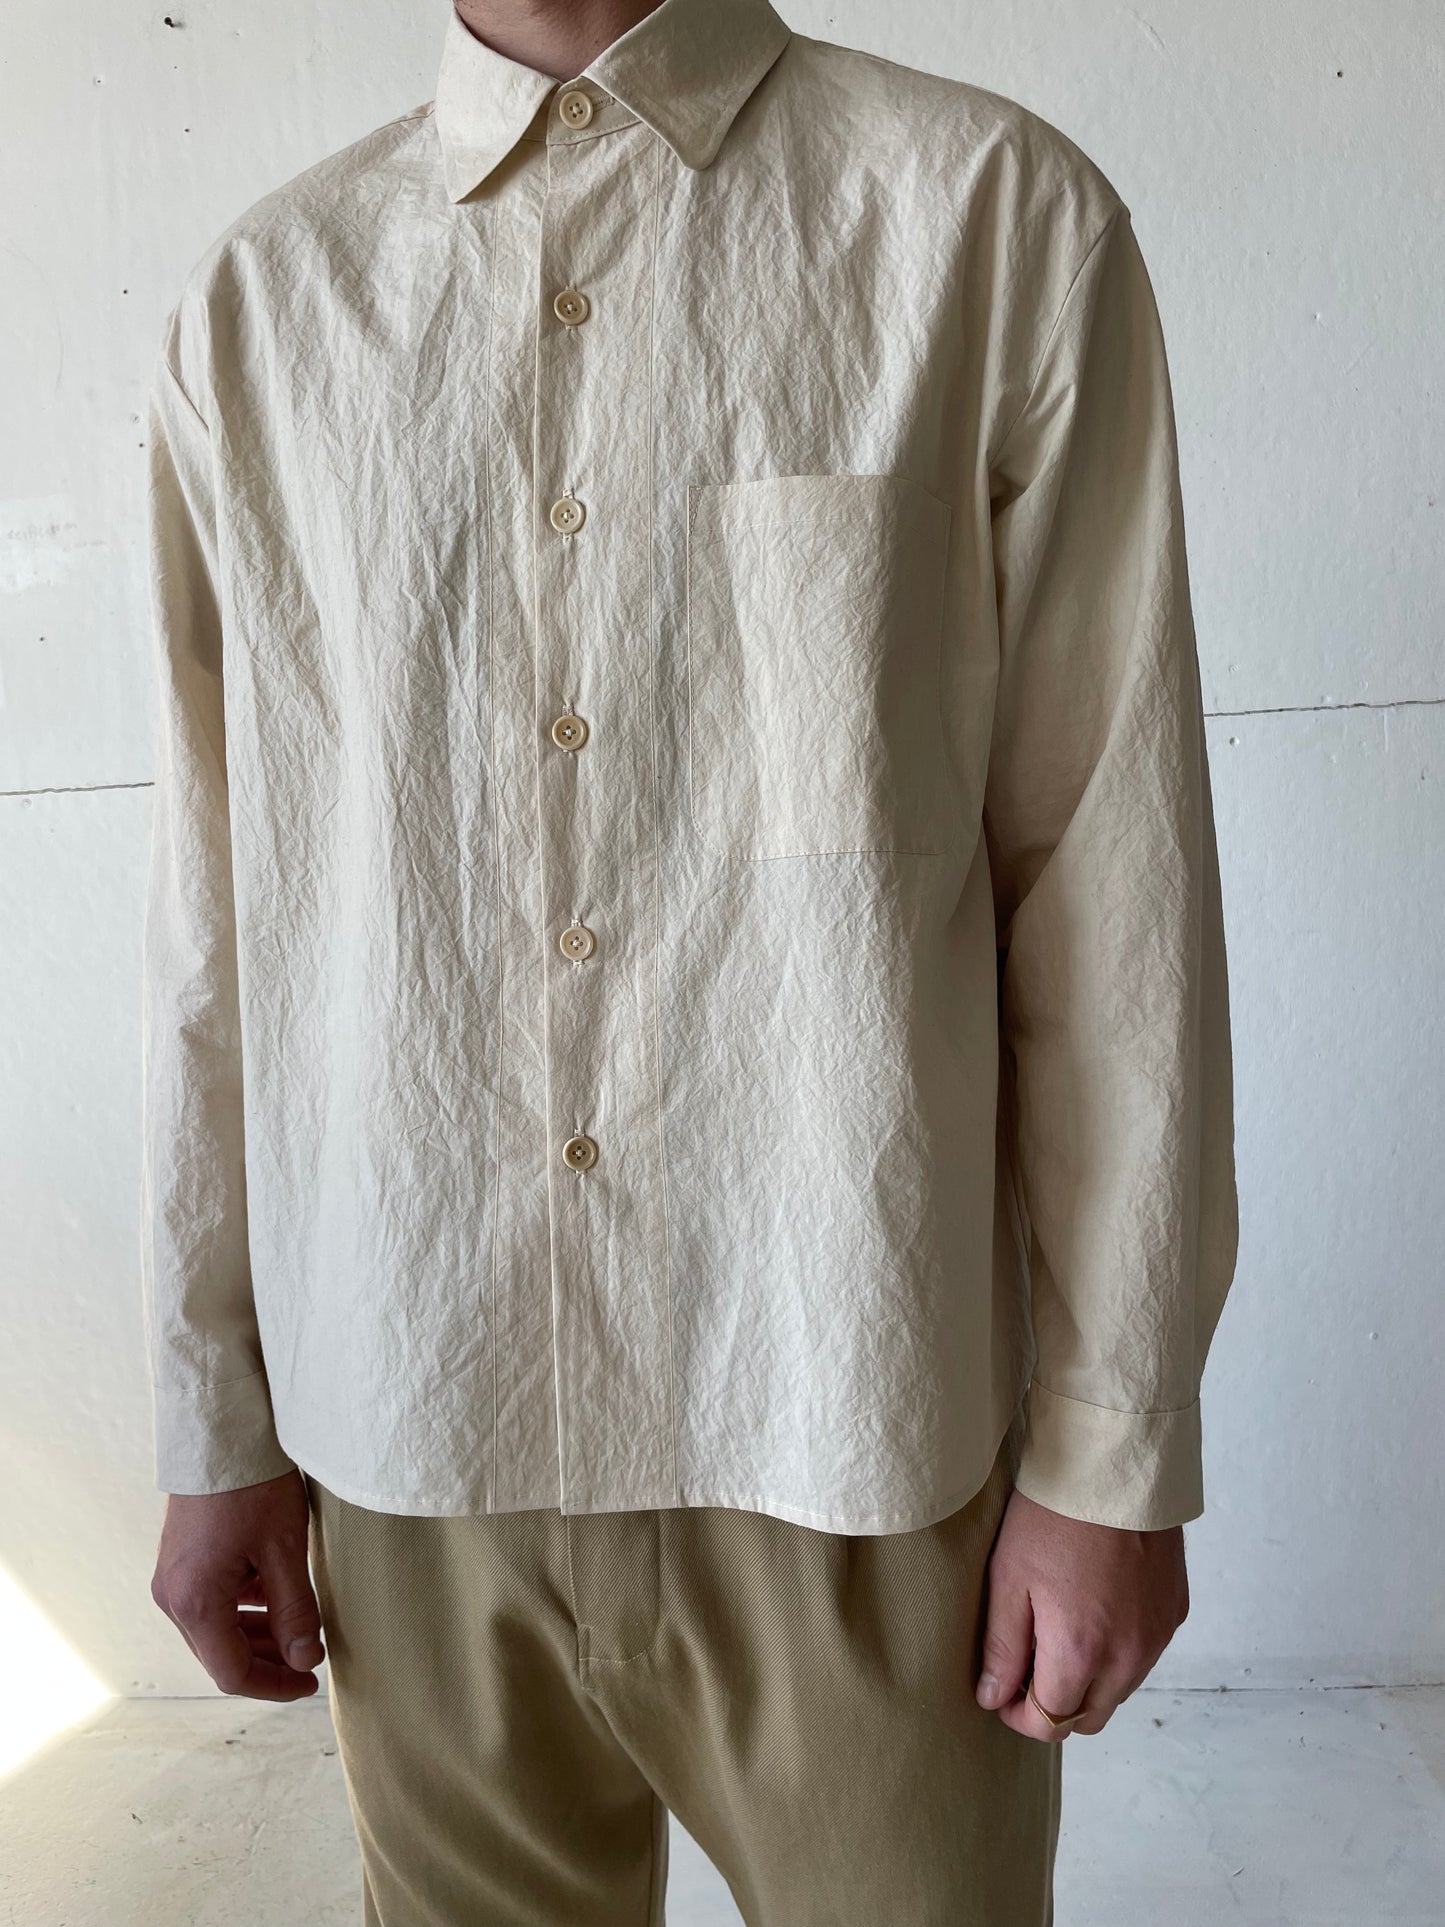 Tent Shirt in Cotton/Linen Typewriter Cloth